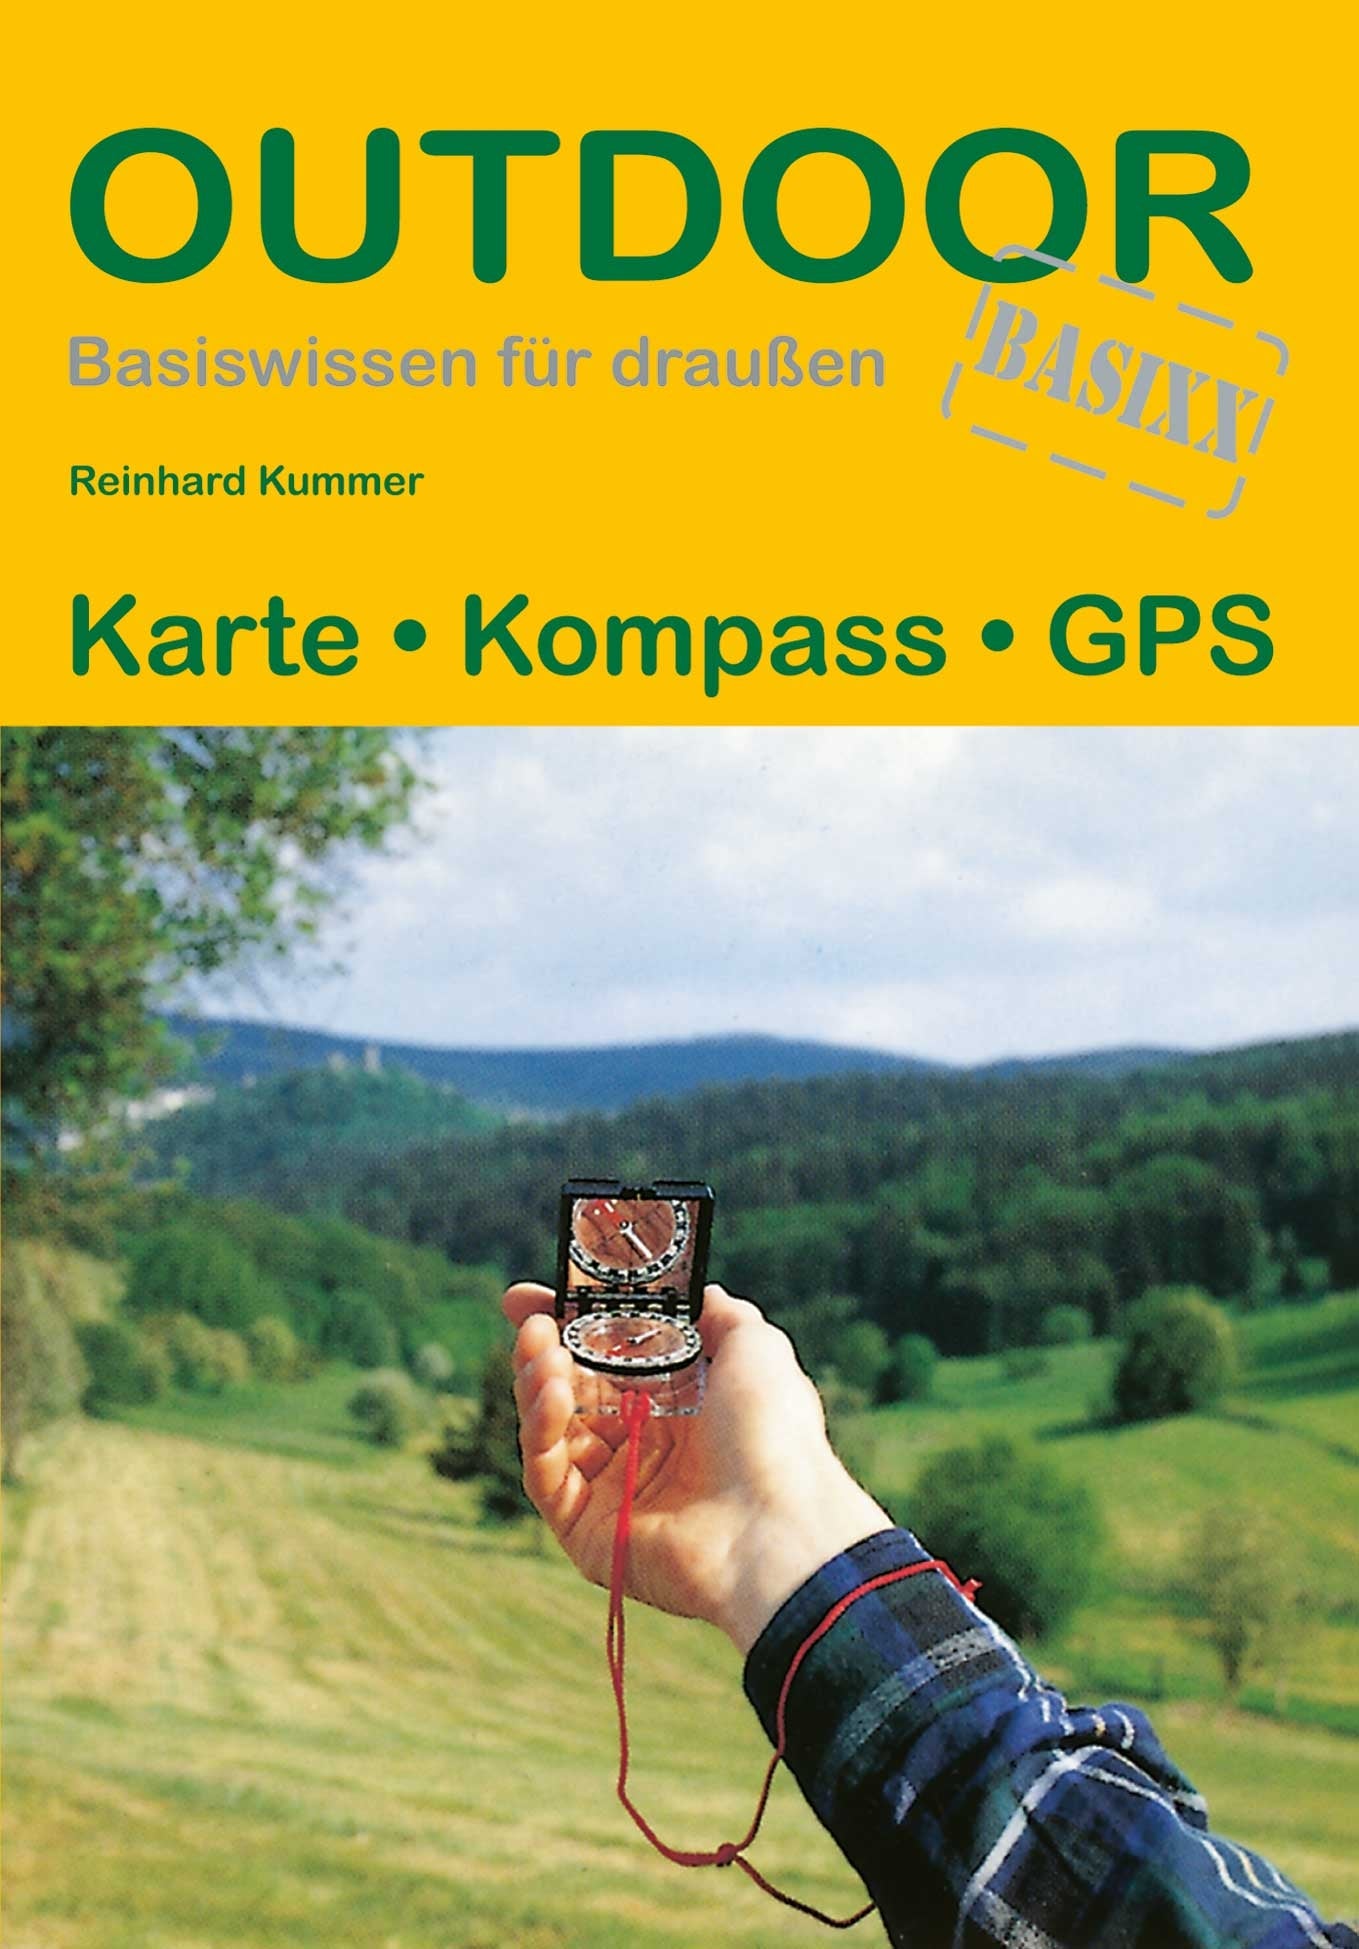 Basic information for driving: Map-Kompass-GPS (4)